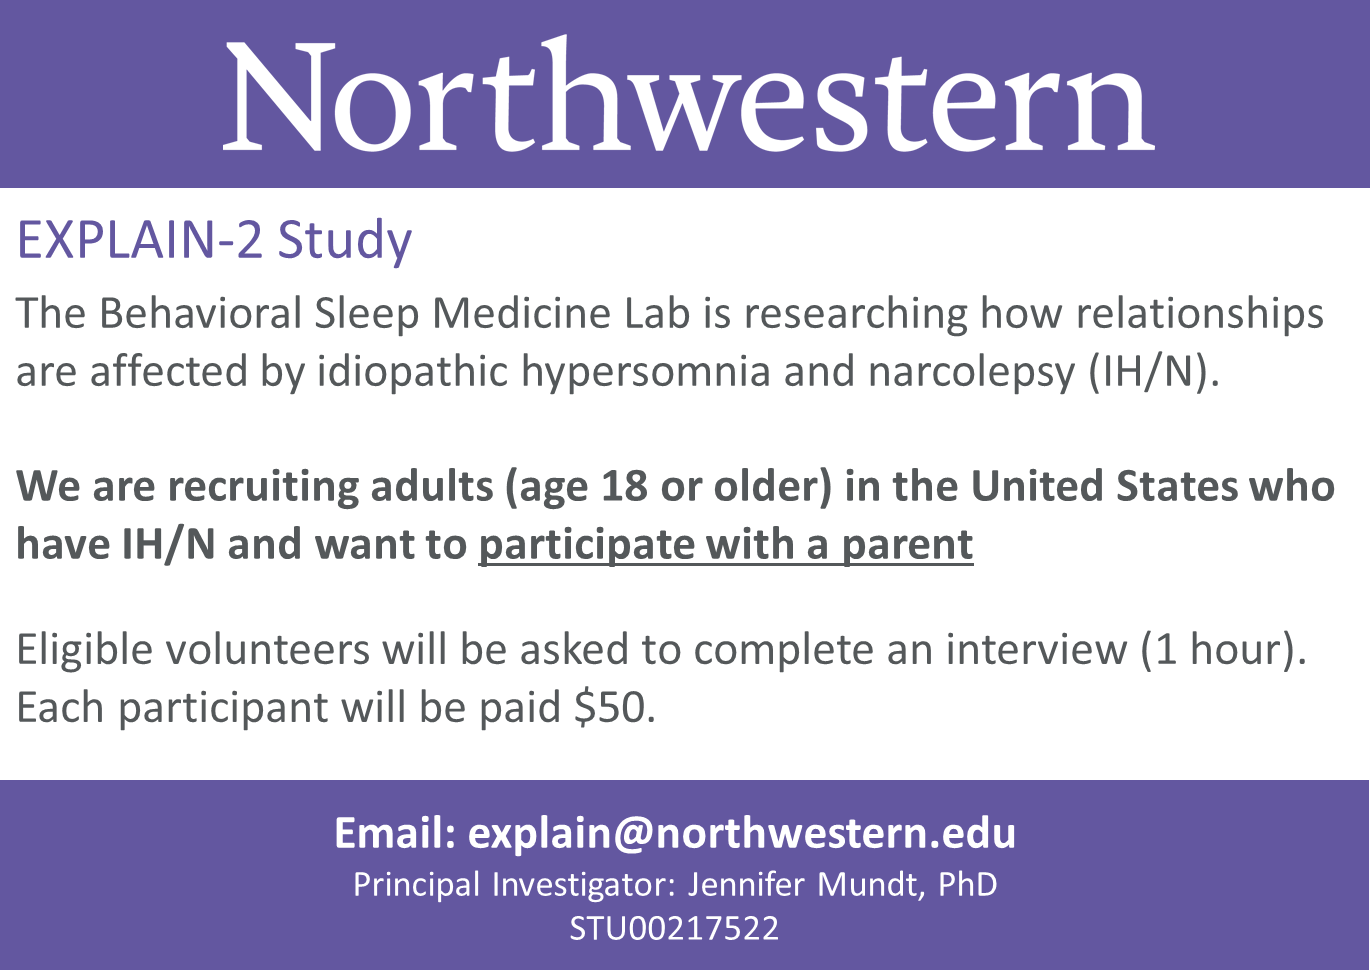 Northwestern Explain-2 Study Description - Email explain@northwestern.edu to learn more